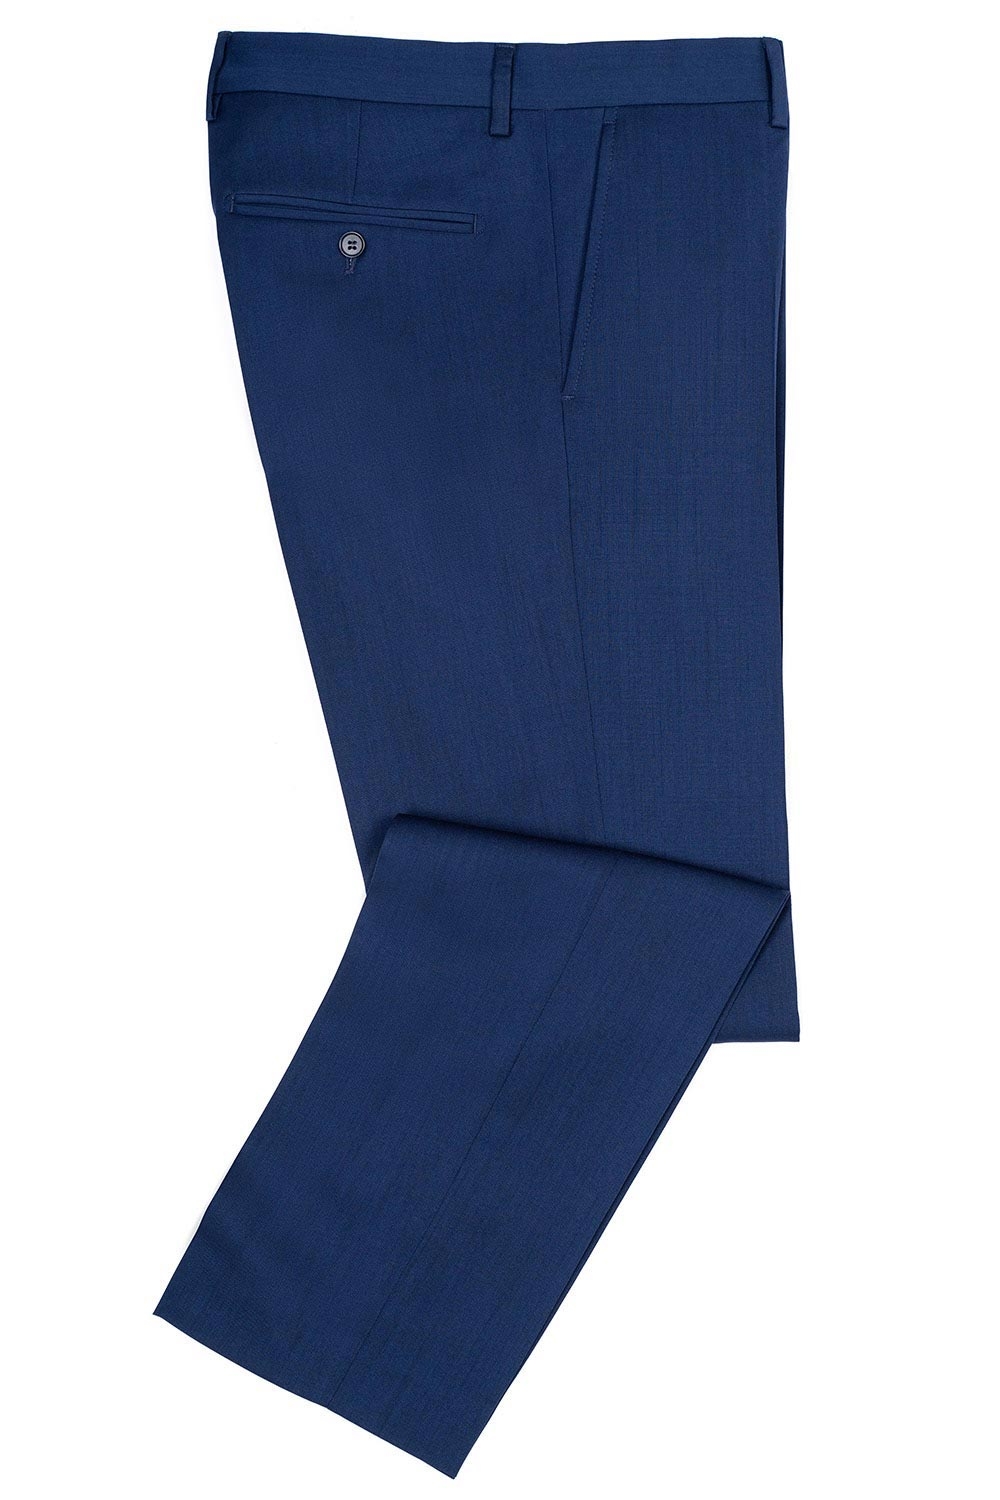 Pantaloni conti slim albastri uni 1